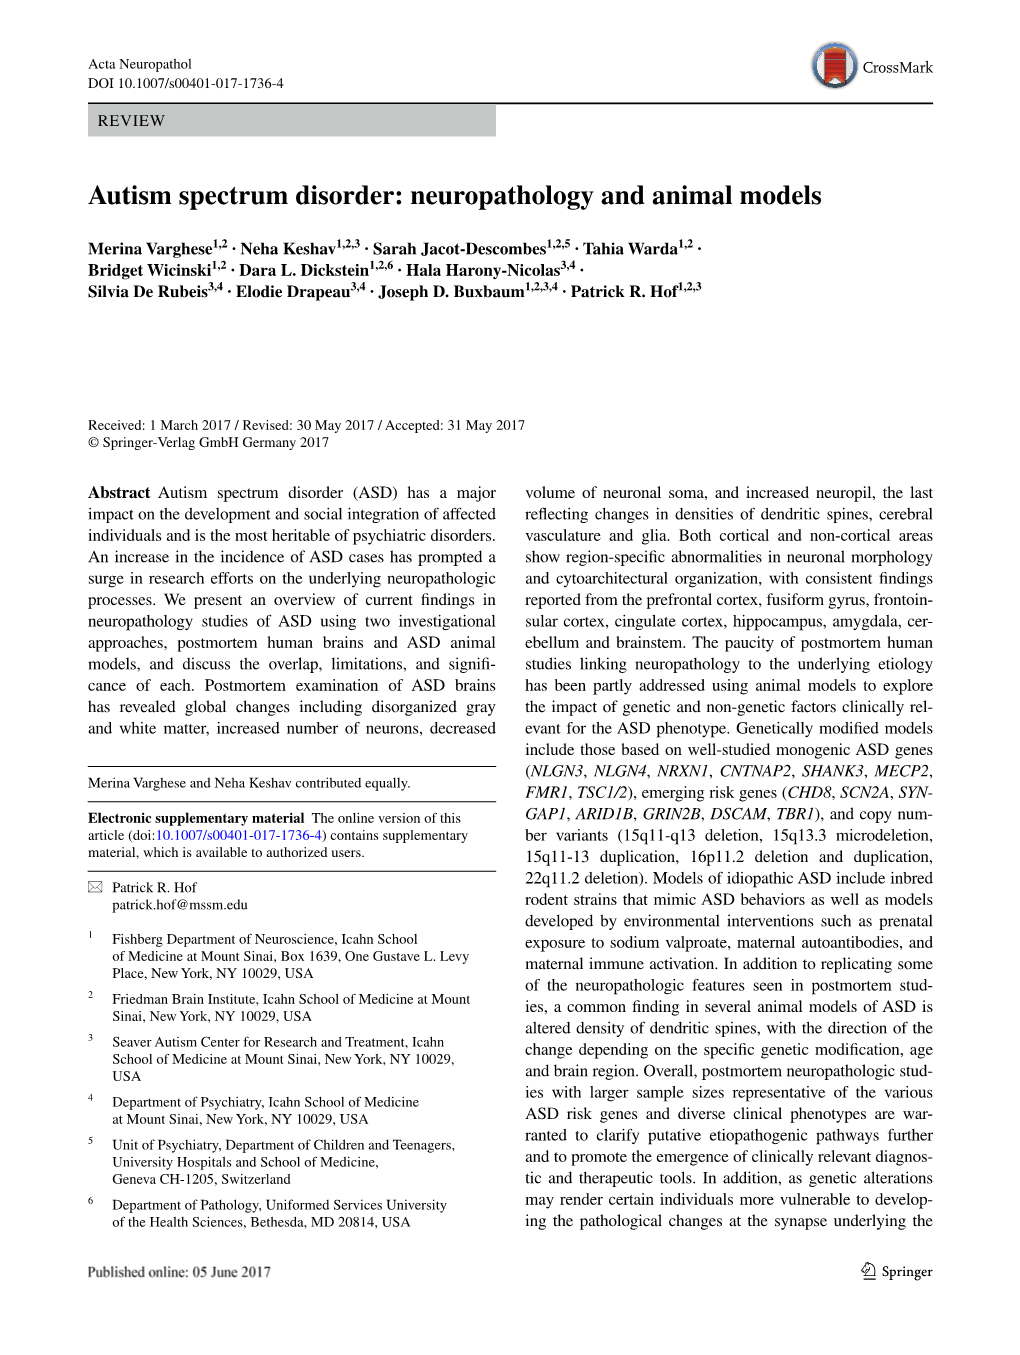 Autism Spectrum Disorder: Neuropathology and Animal Models